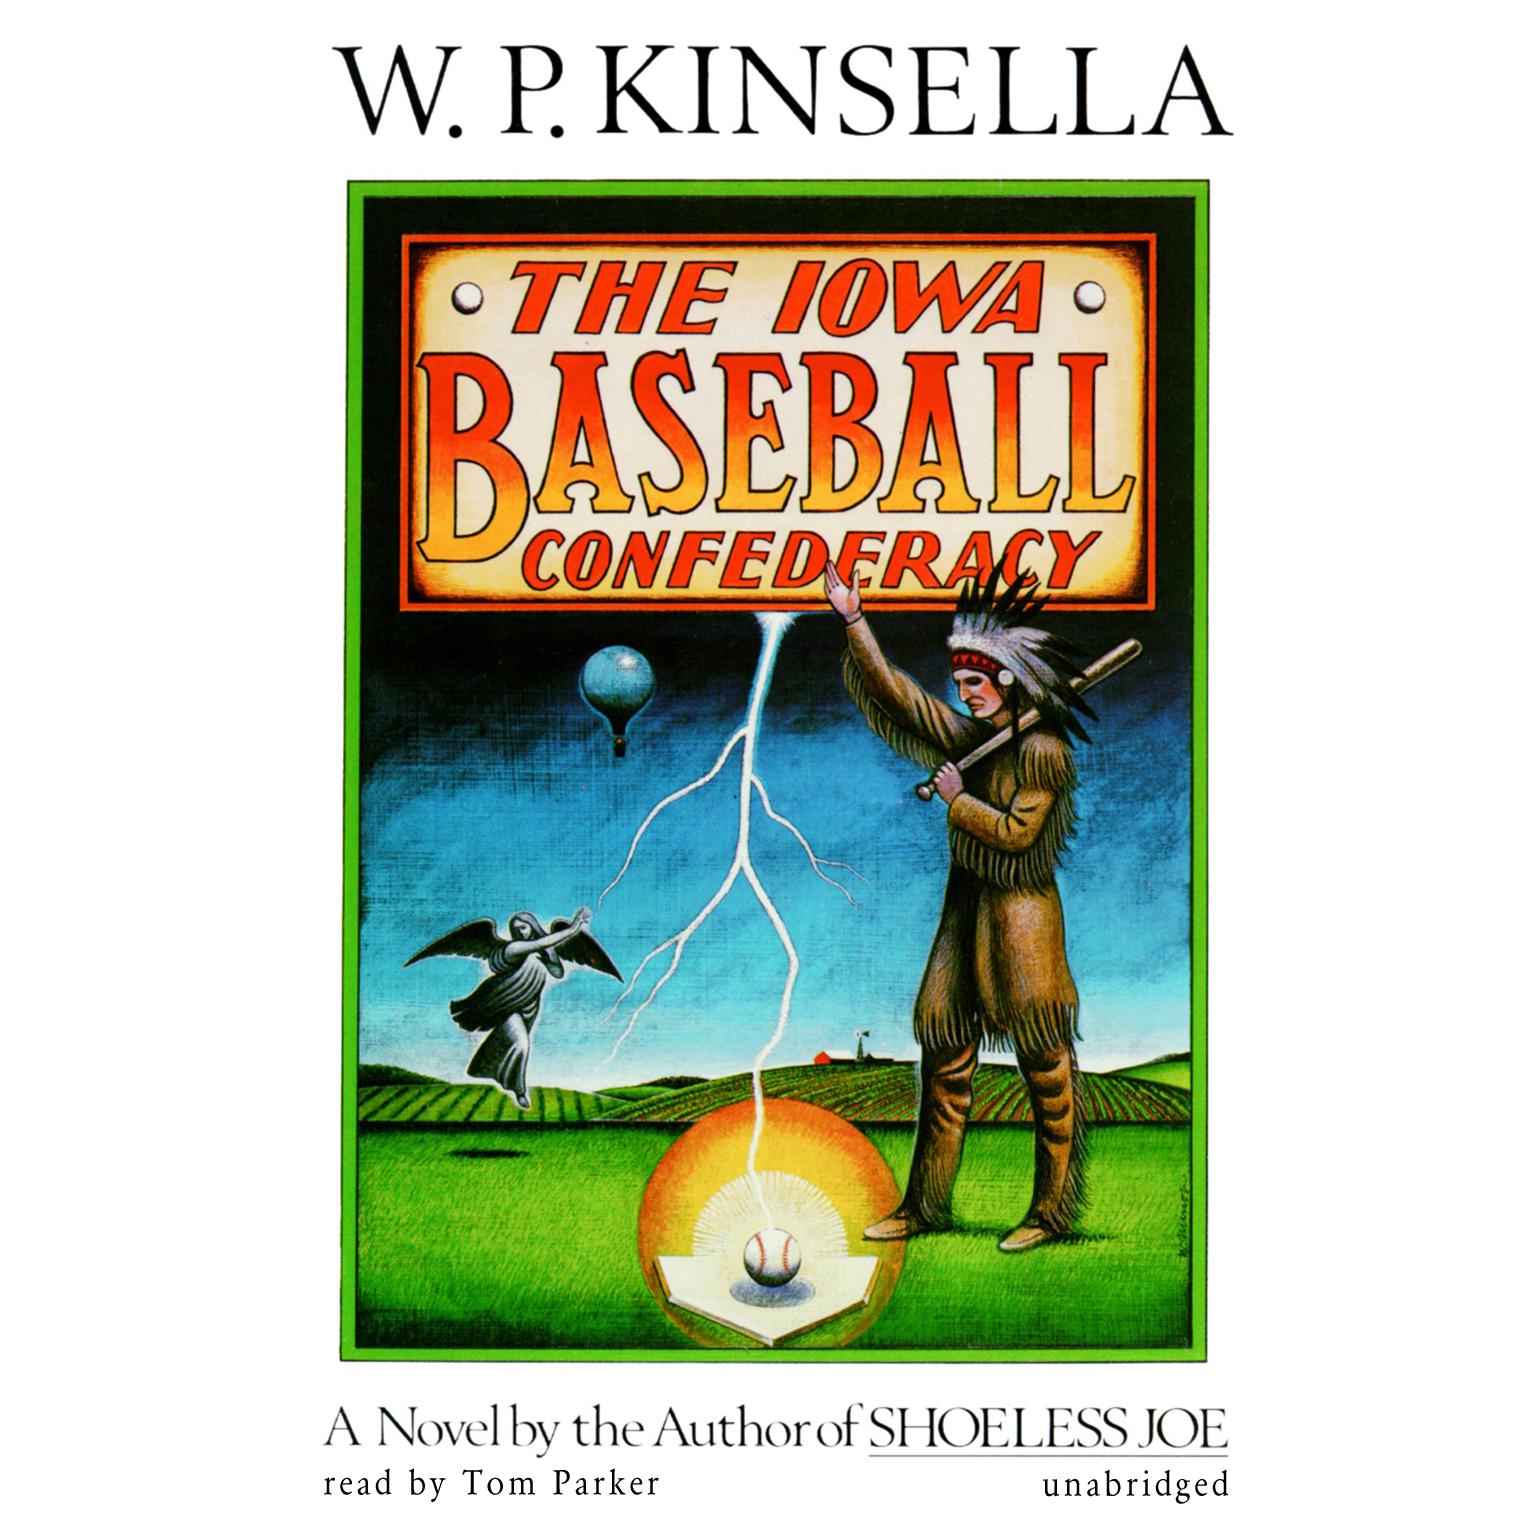 The Iowa Baseball Confederacy Audiobook by W. P. Kinsella — Listen Now